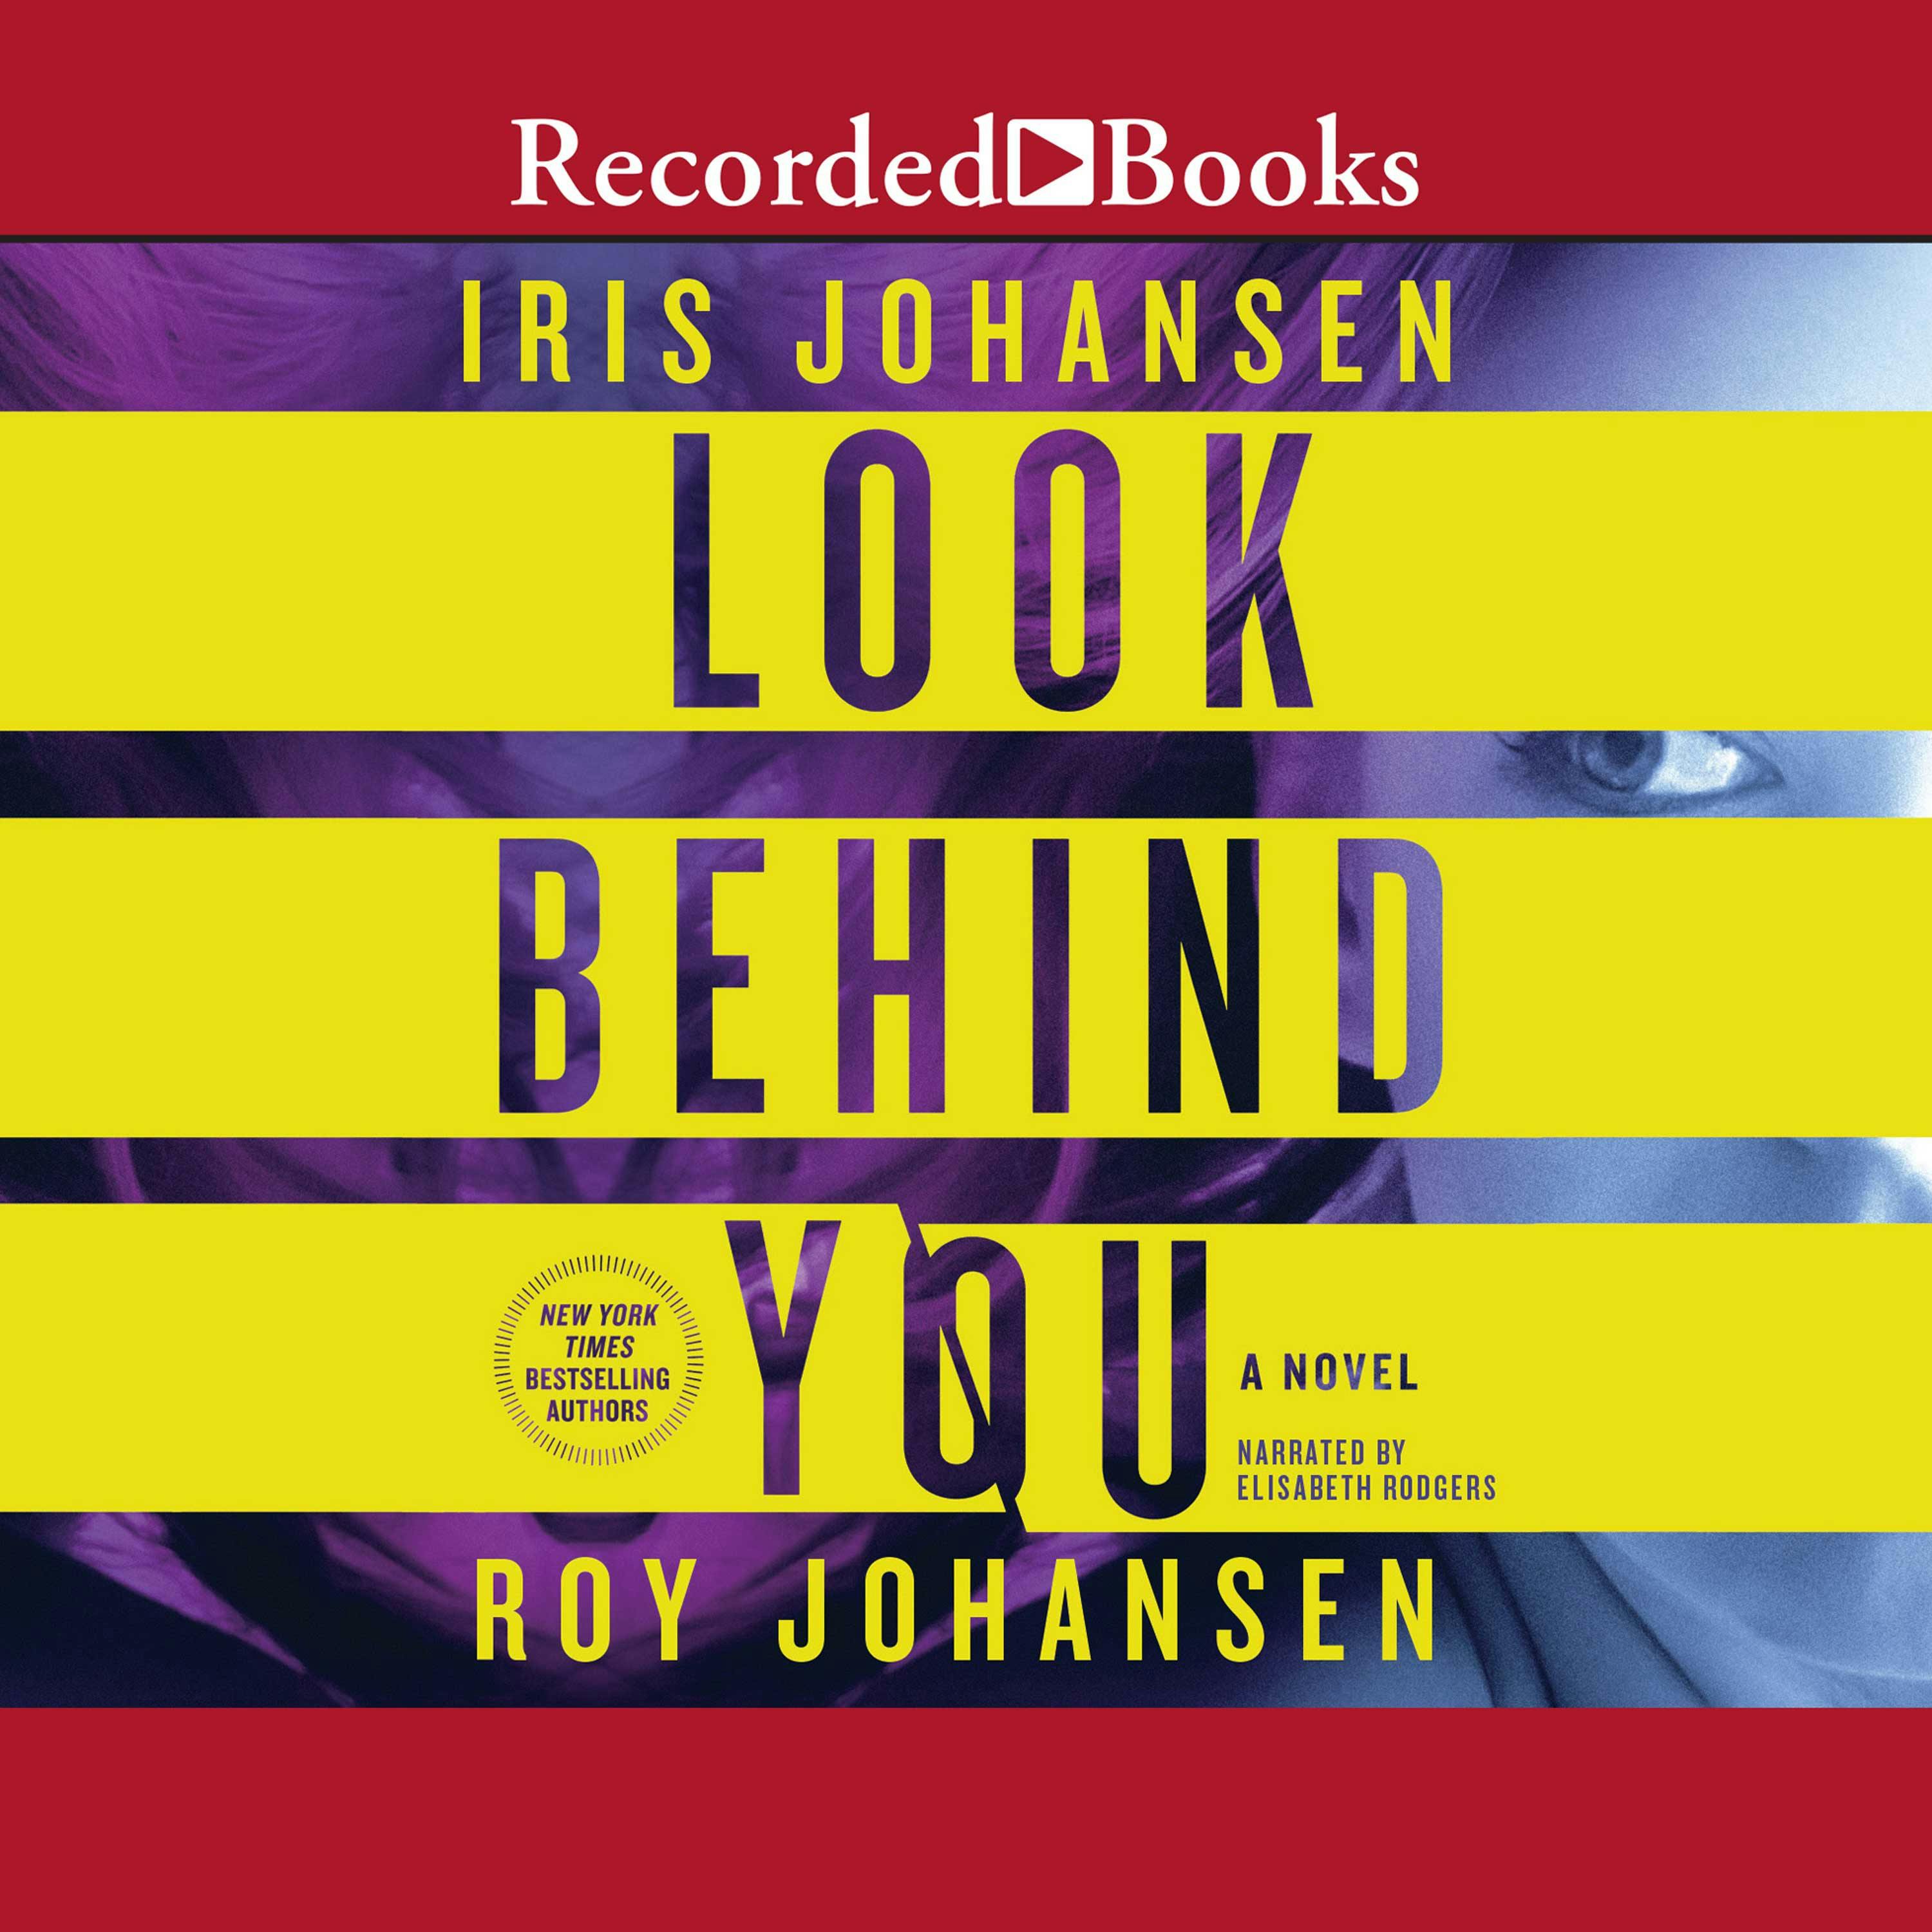 Look Behind You - Roy Johansen, Iris Johansen